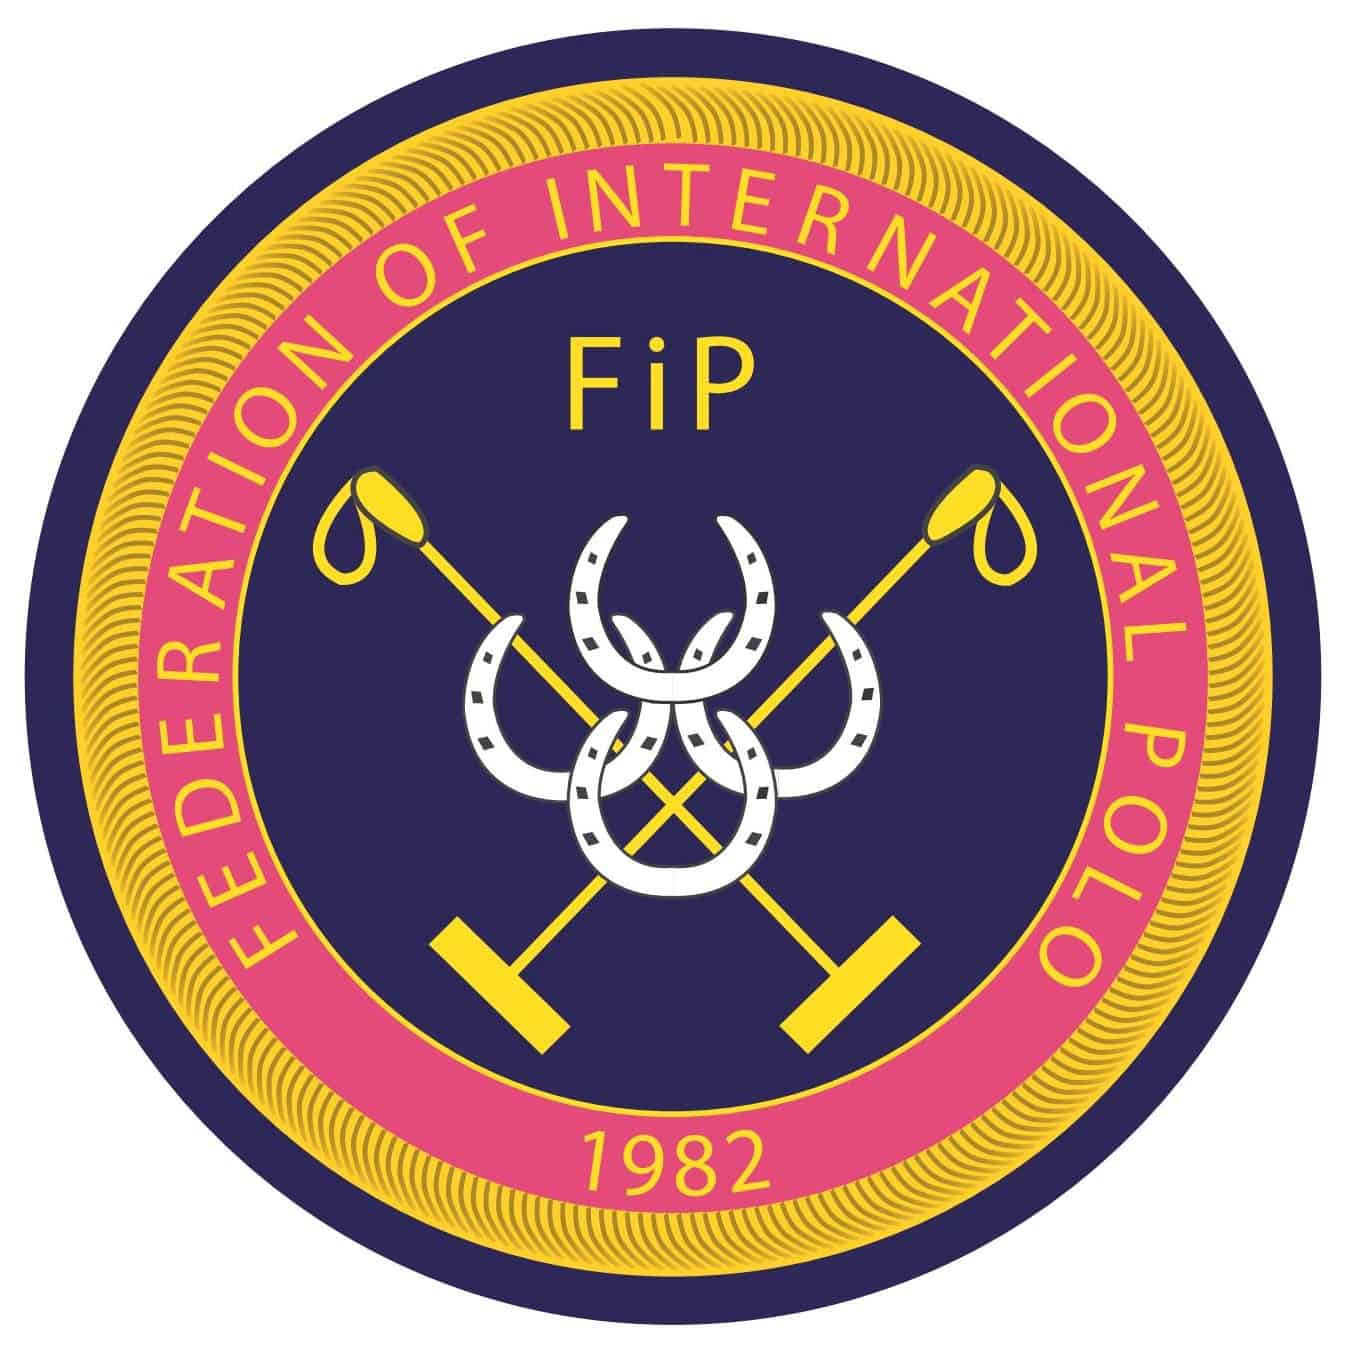 Federation of International Polo FIP logo